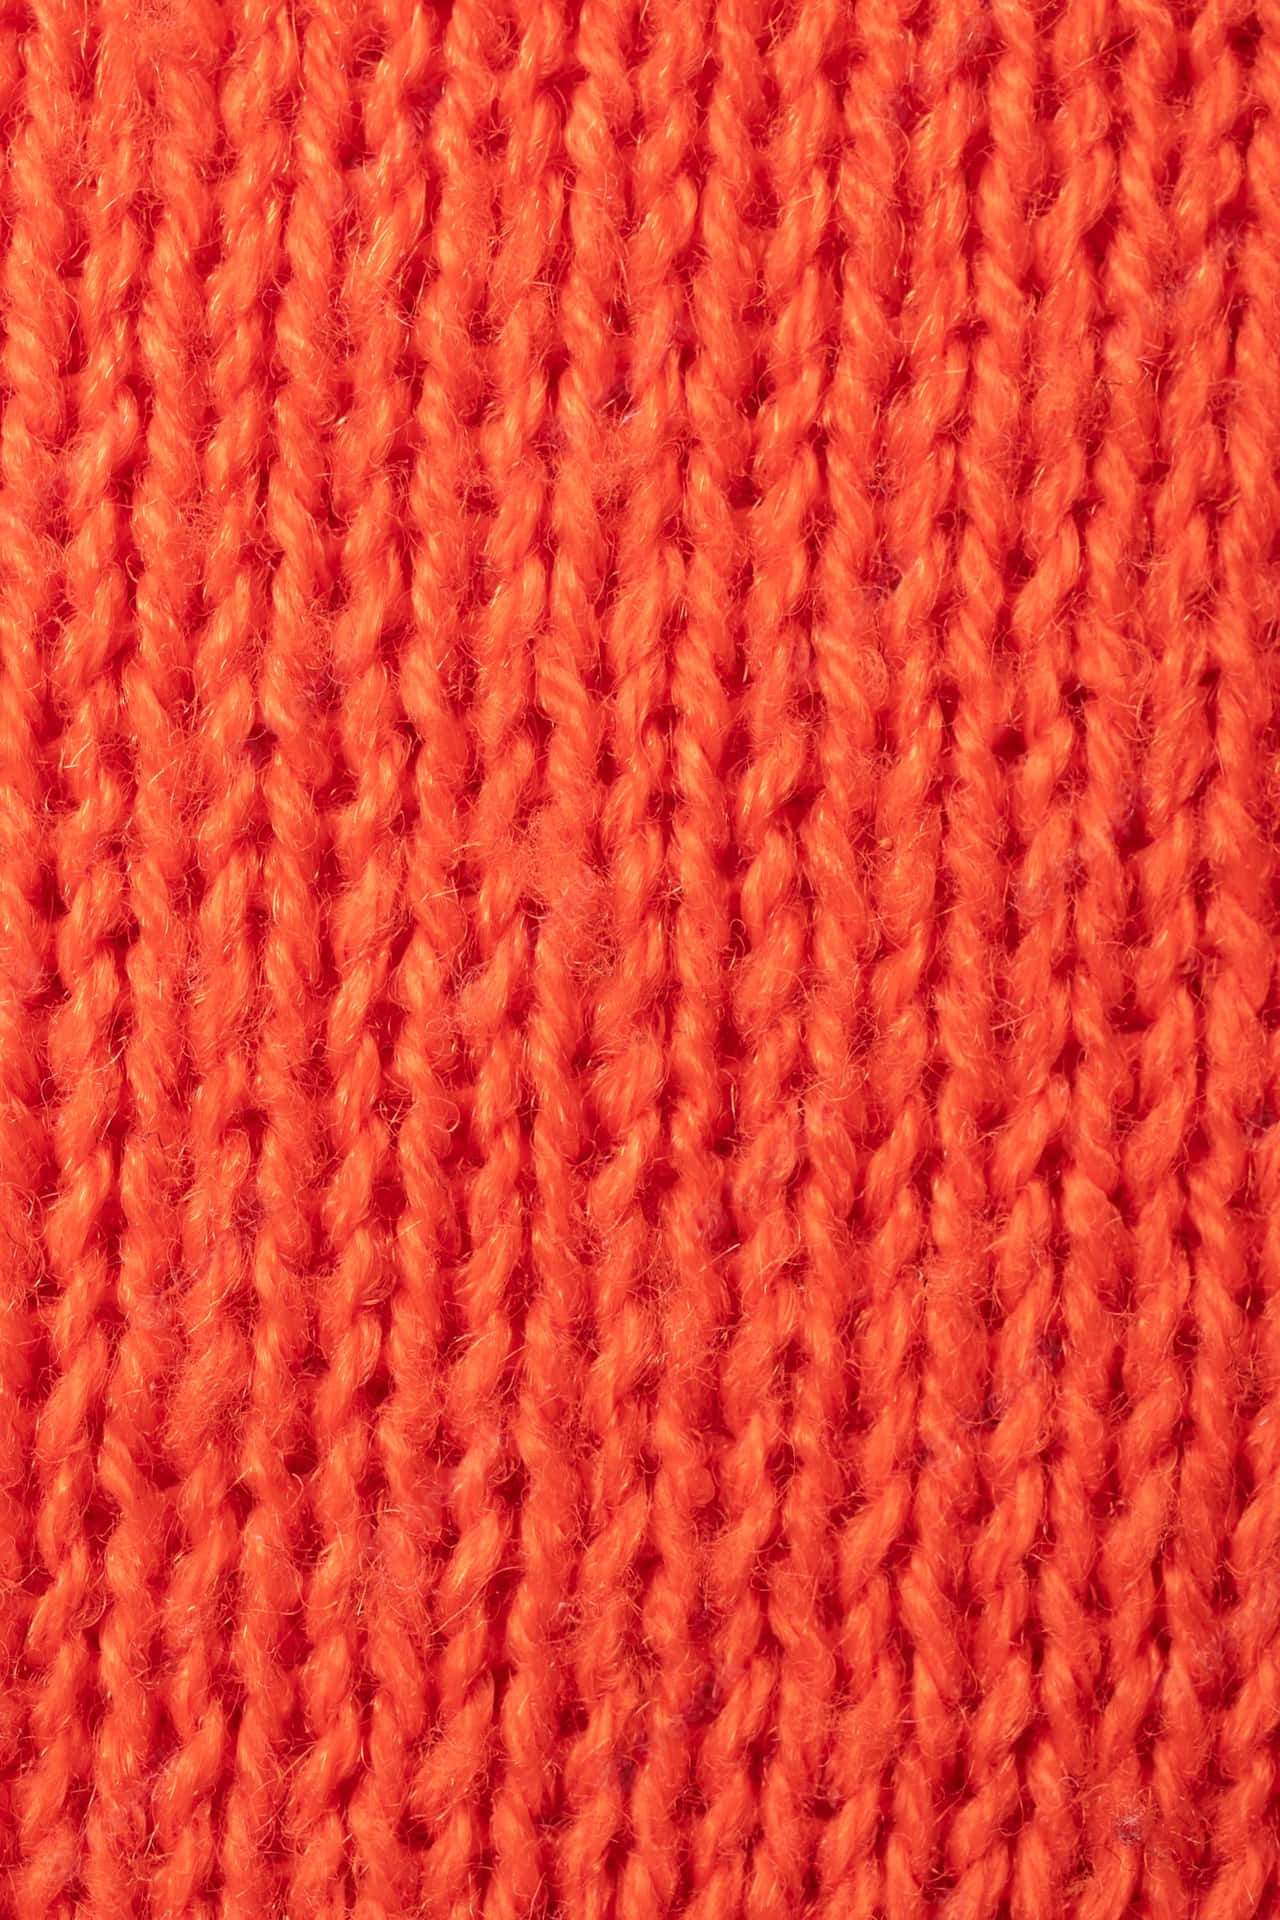 Orange Knitted Yarn Texture Wallpaper